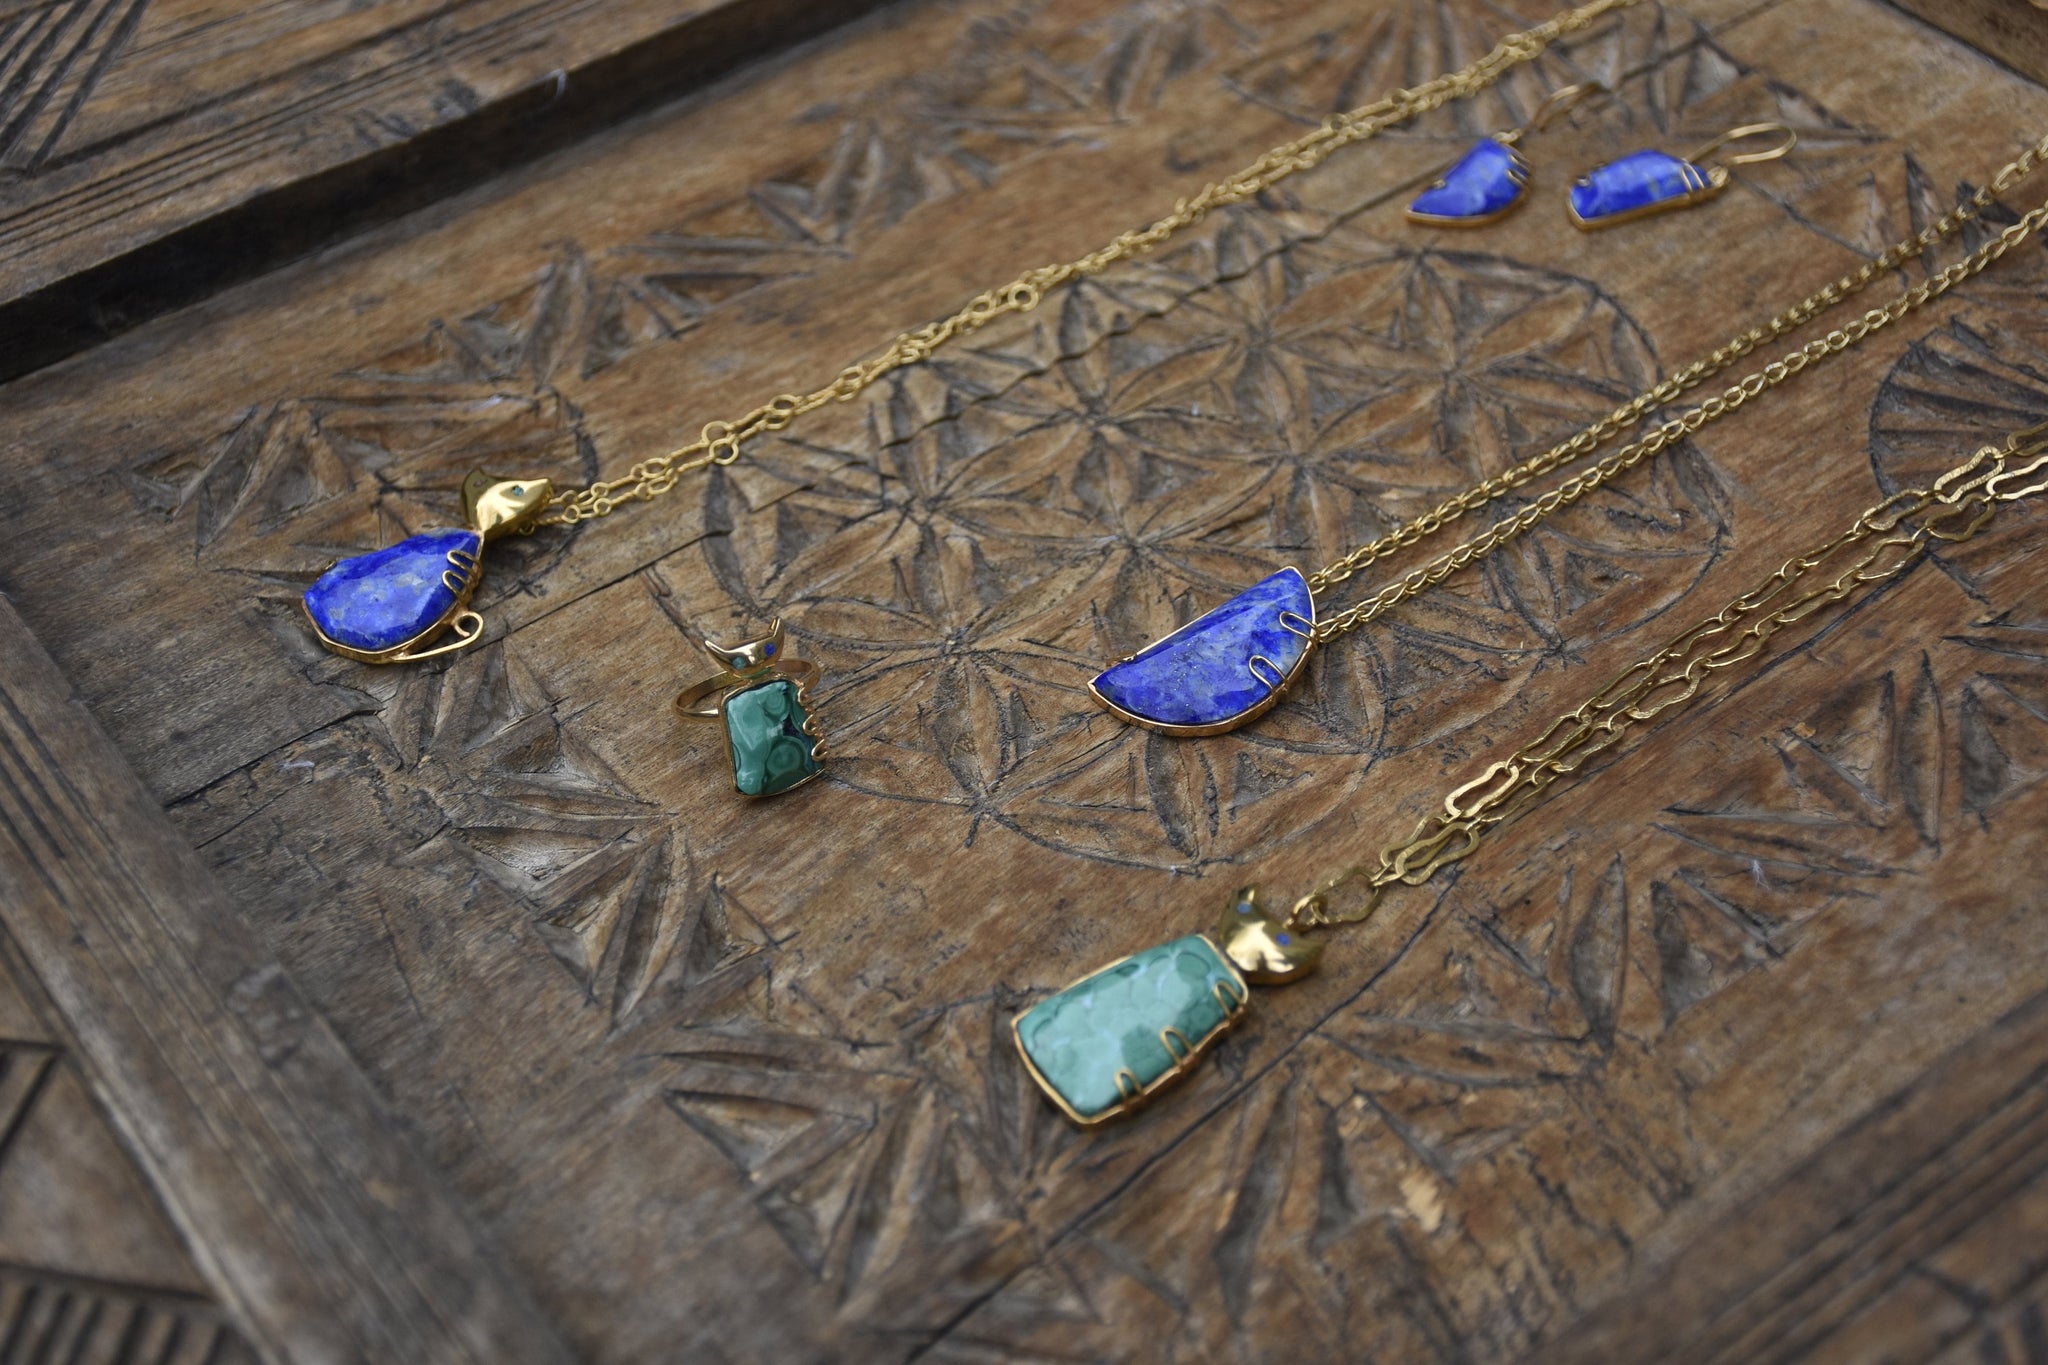 Handmade Afghan Ring Malachite Lapis Lazuli Cat Gold Brass Elegant Inspired Jewelry Boho Blue Green Gemstone Chic Accessories Gift for Her